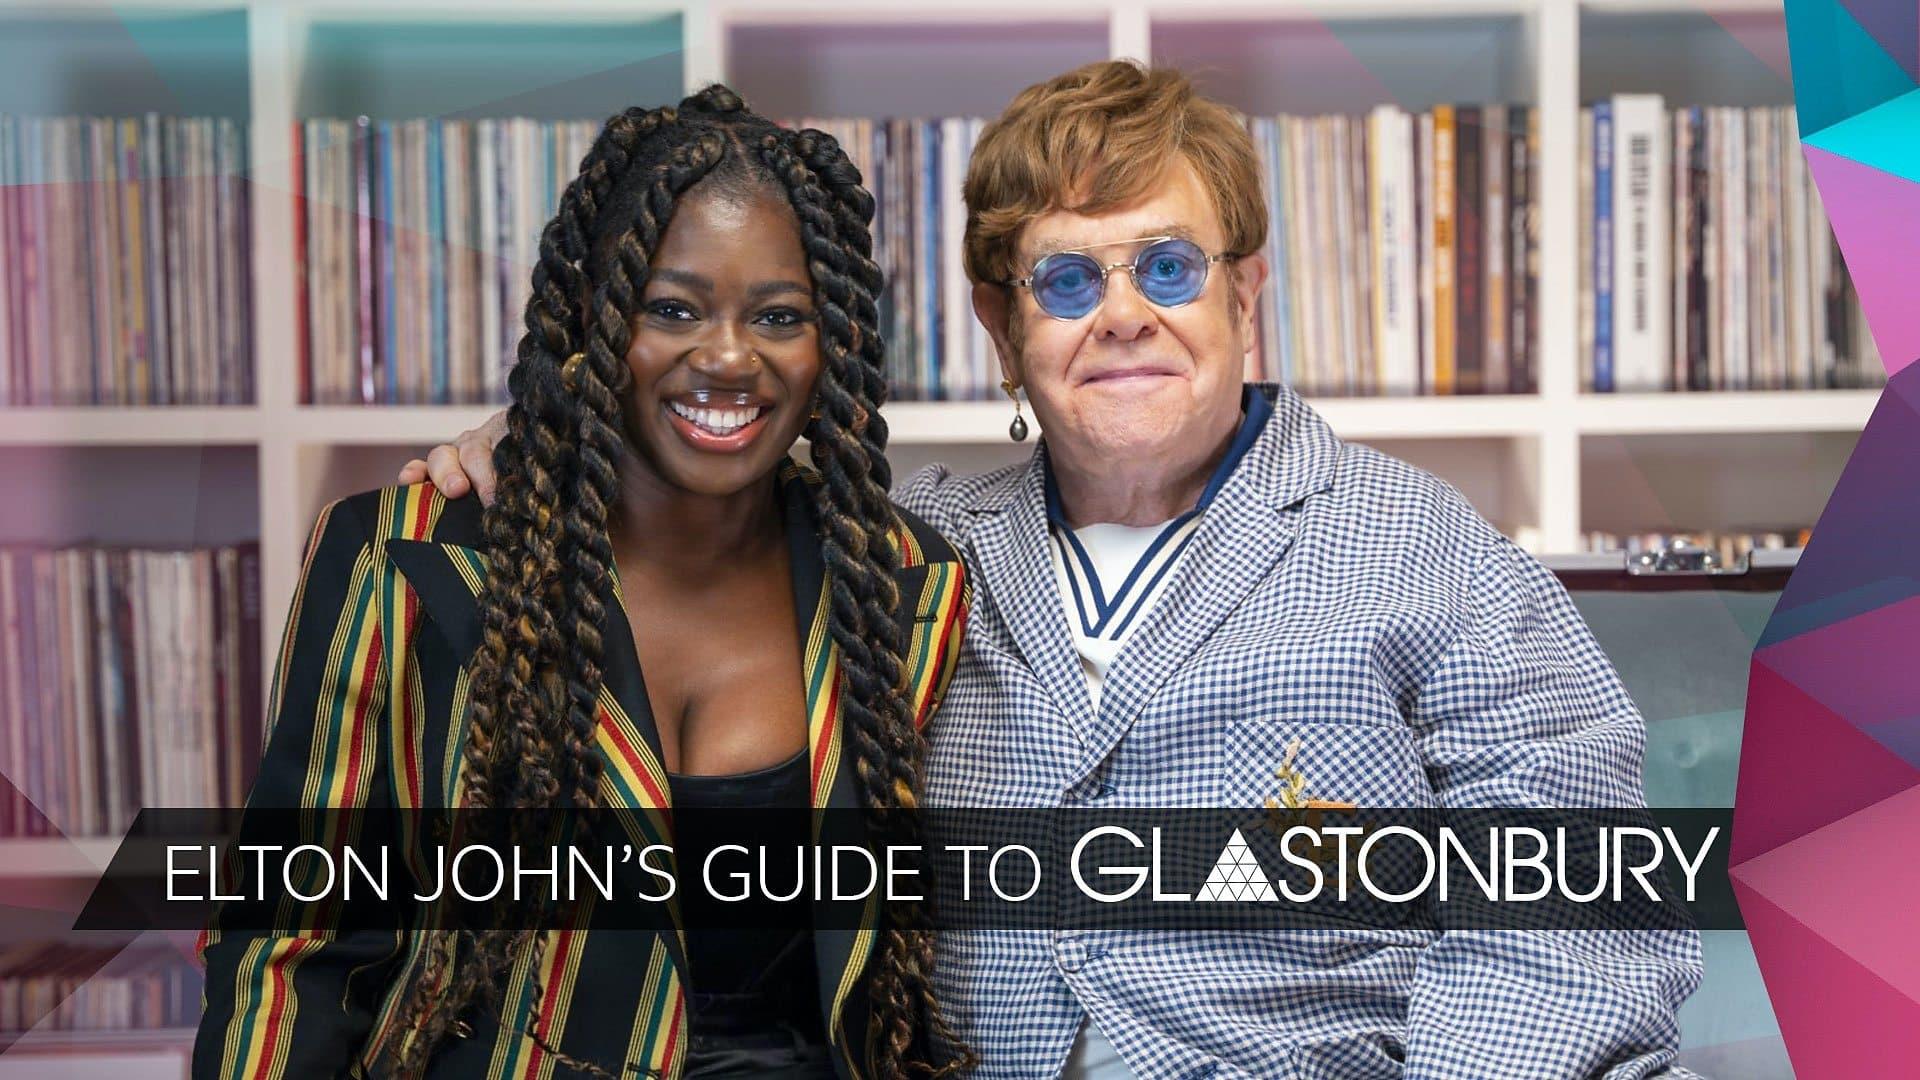 Elton John’s Guide to Glastonbury backdrop